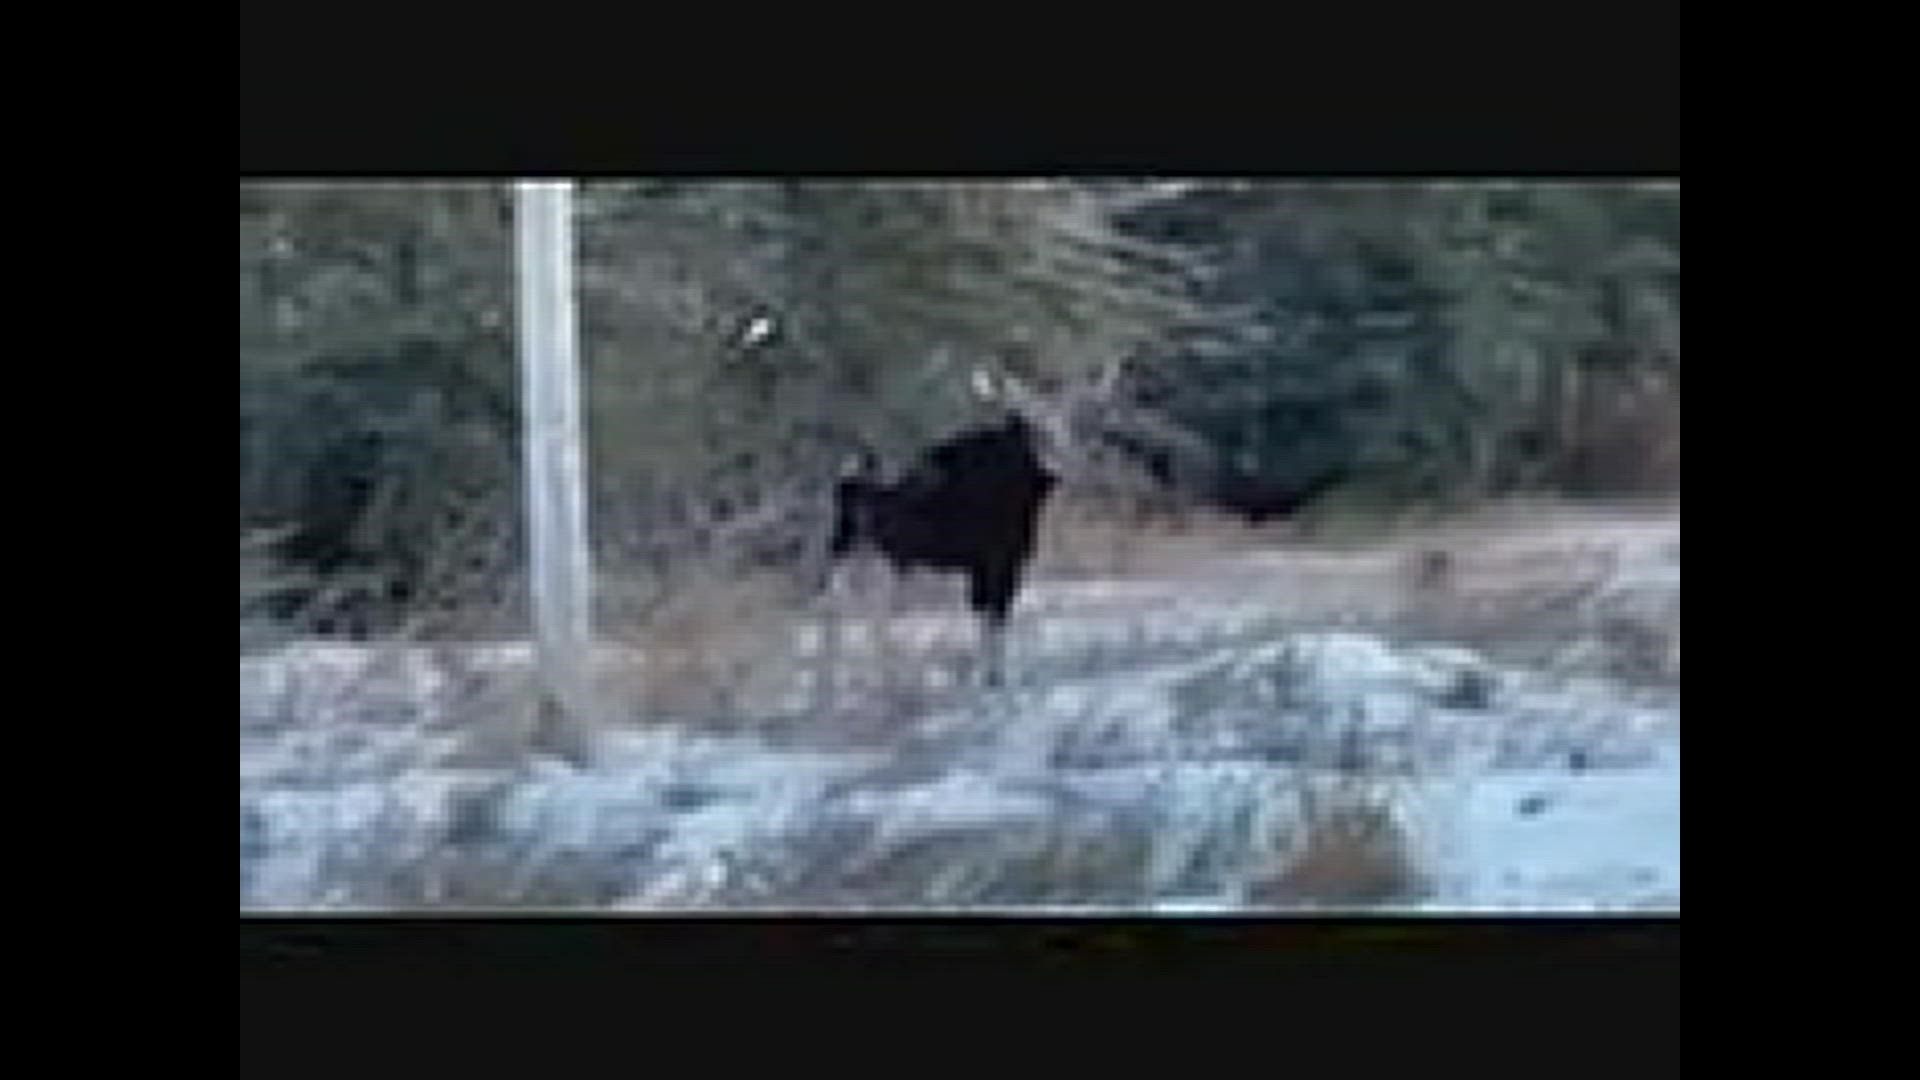 Moose meeting in Rangeley, ME on 01/11/2022
We called him Marty.
Conny&Jon :-)